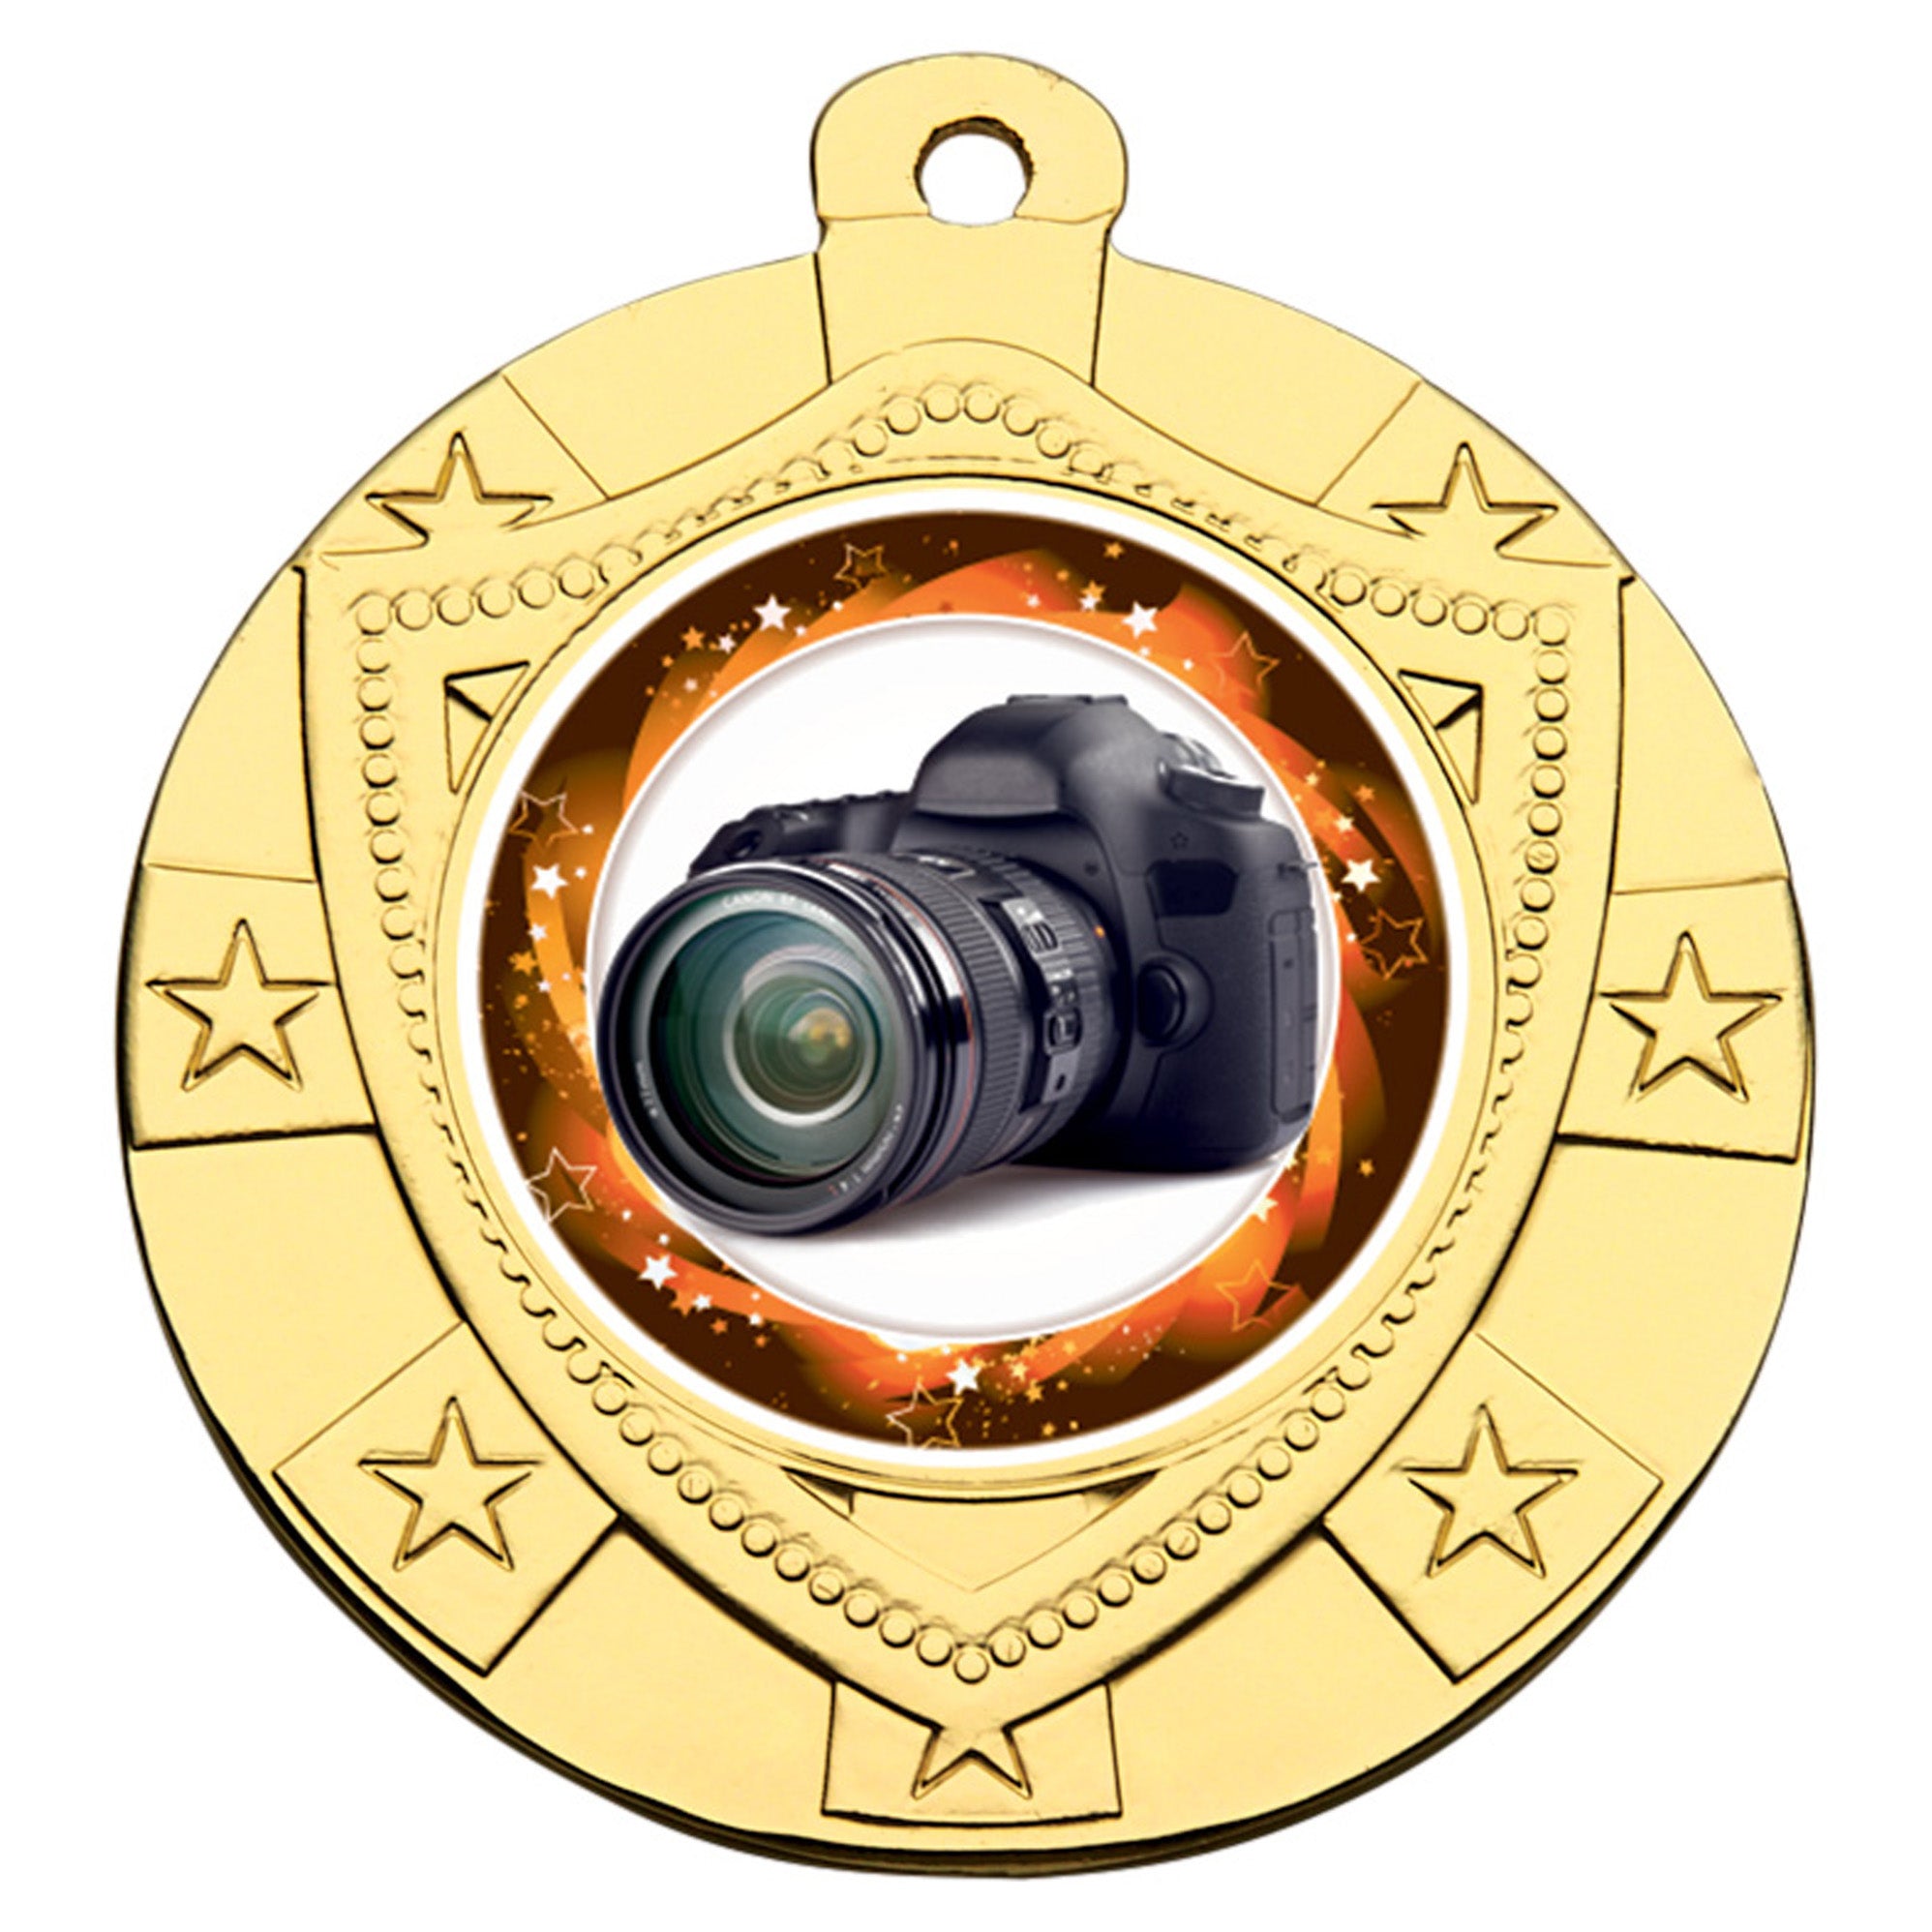 Metal 40mm Gold Shield Medal